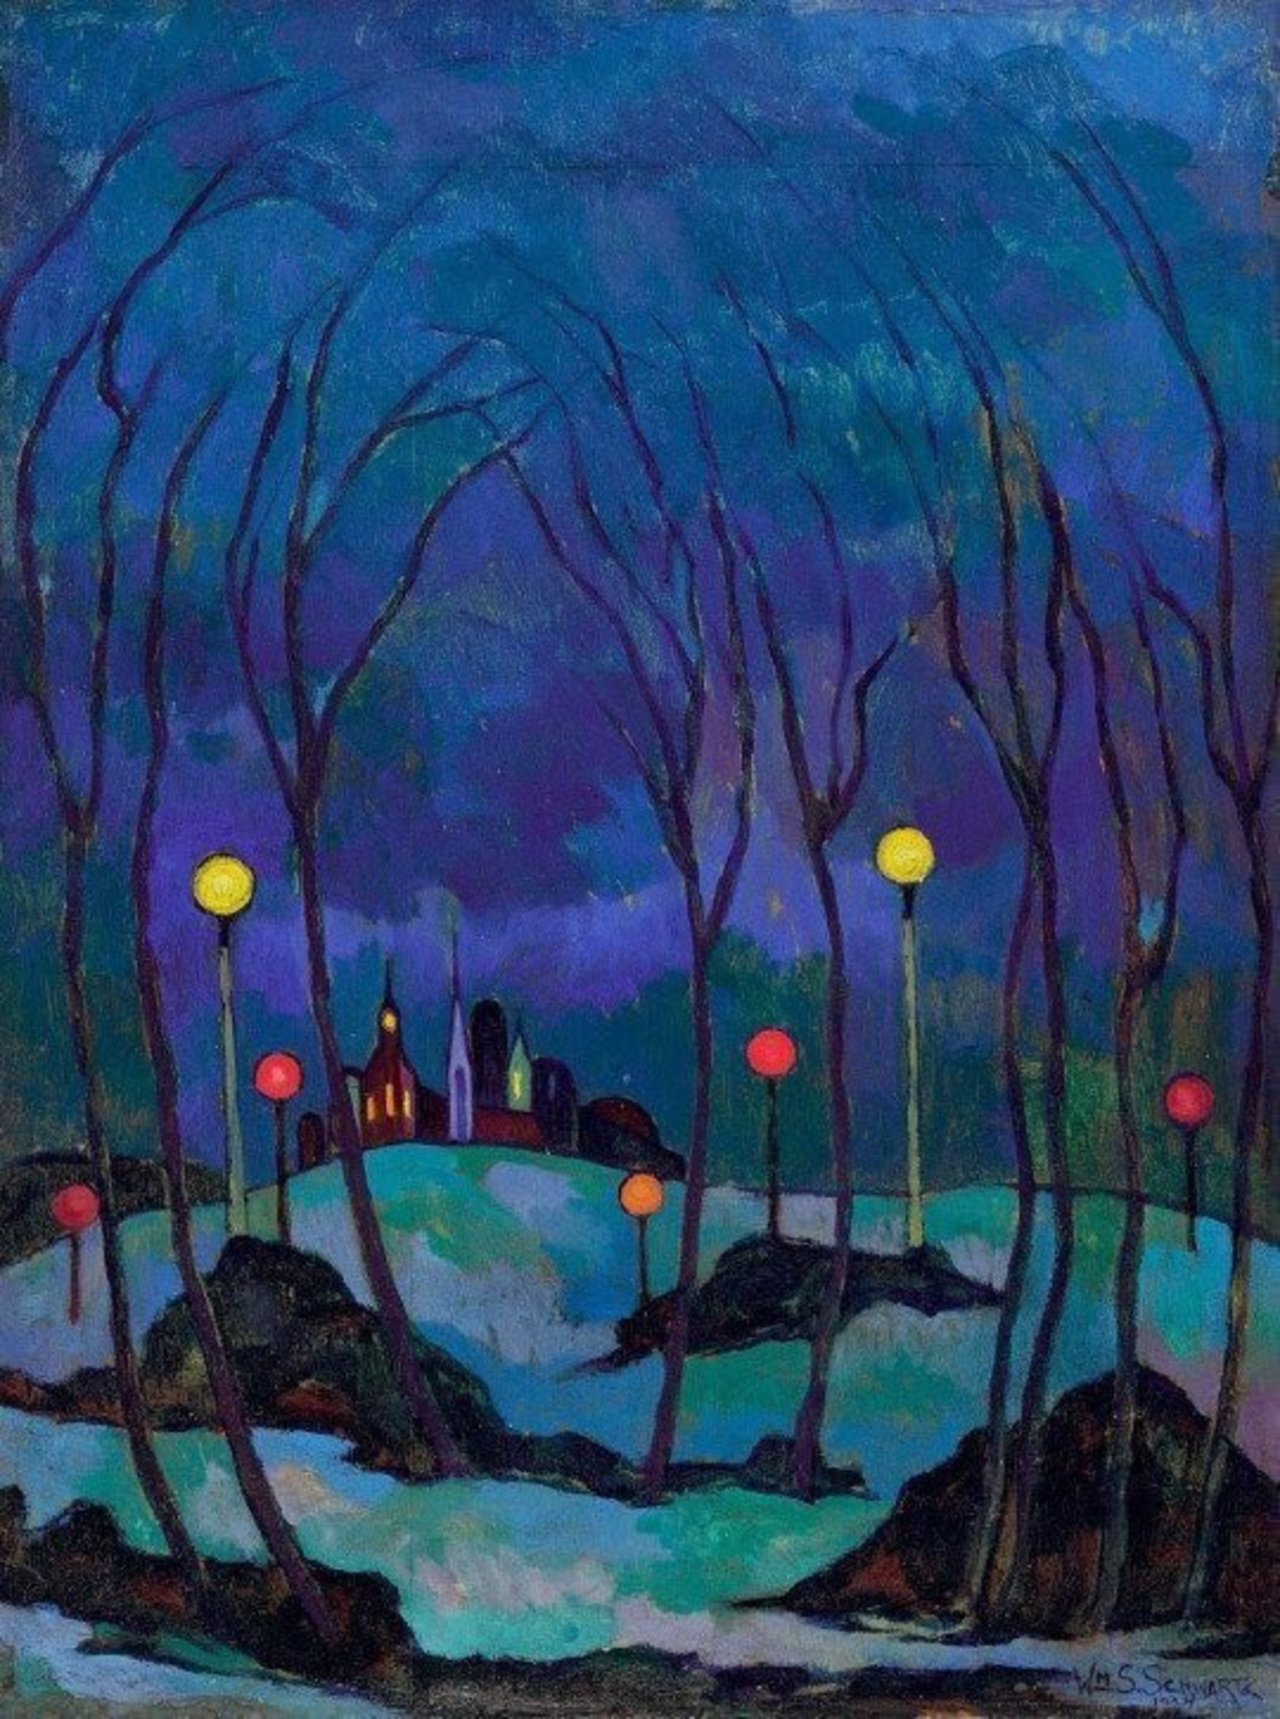 RT @honey_firefly: Winter Evening ~ William Samuel Schwartz, 1924 via @78Derngate https://t.co/sswKlsvUpT